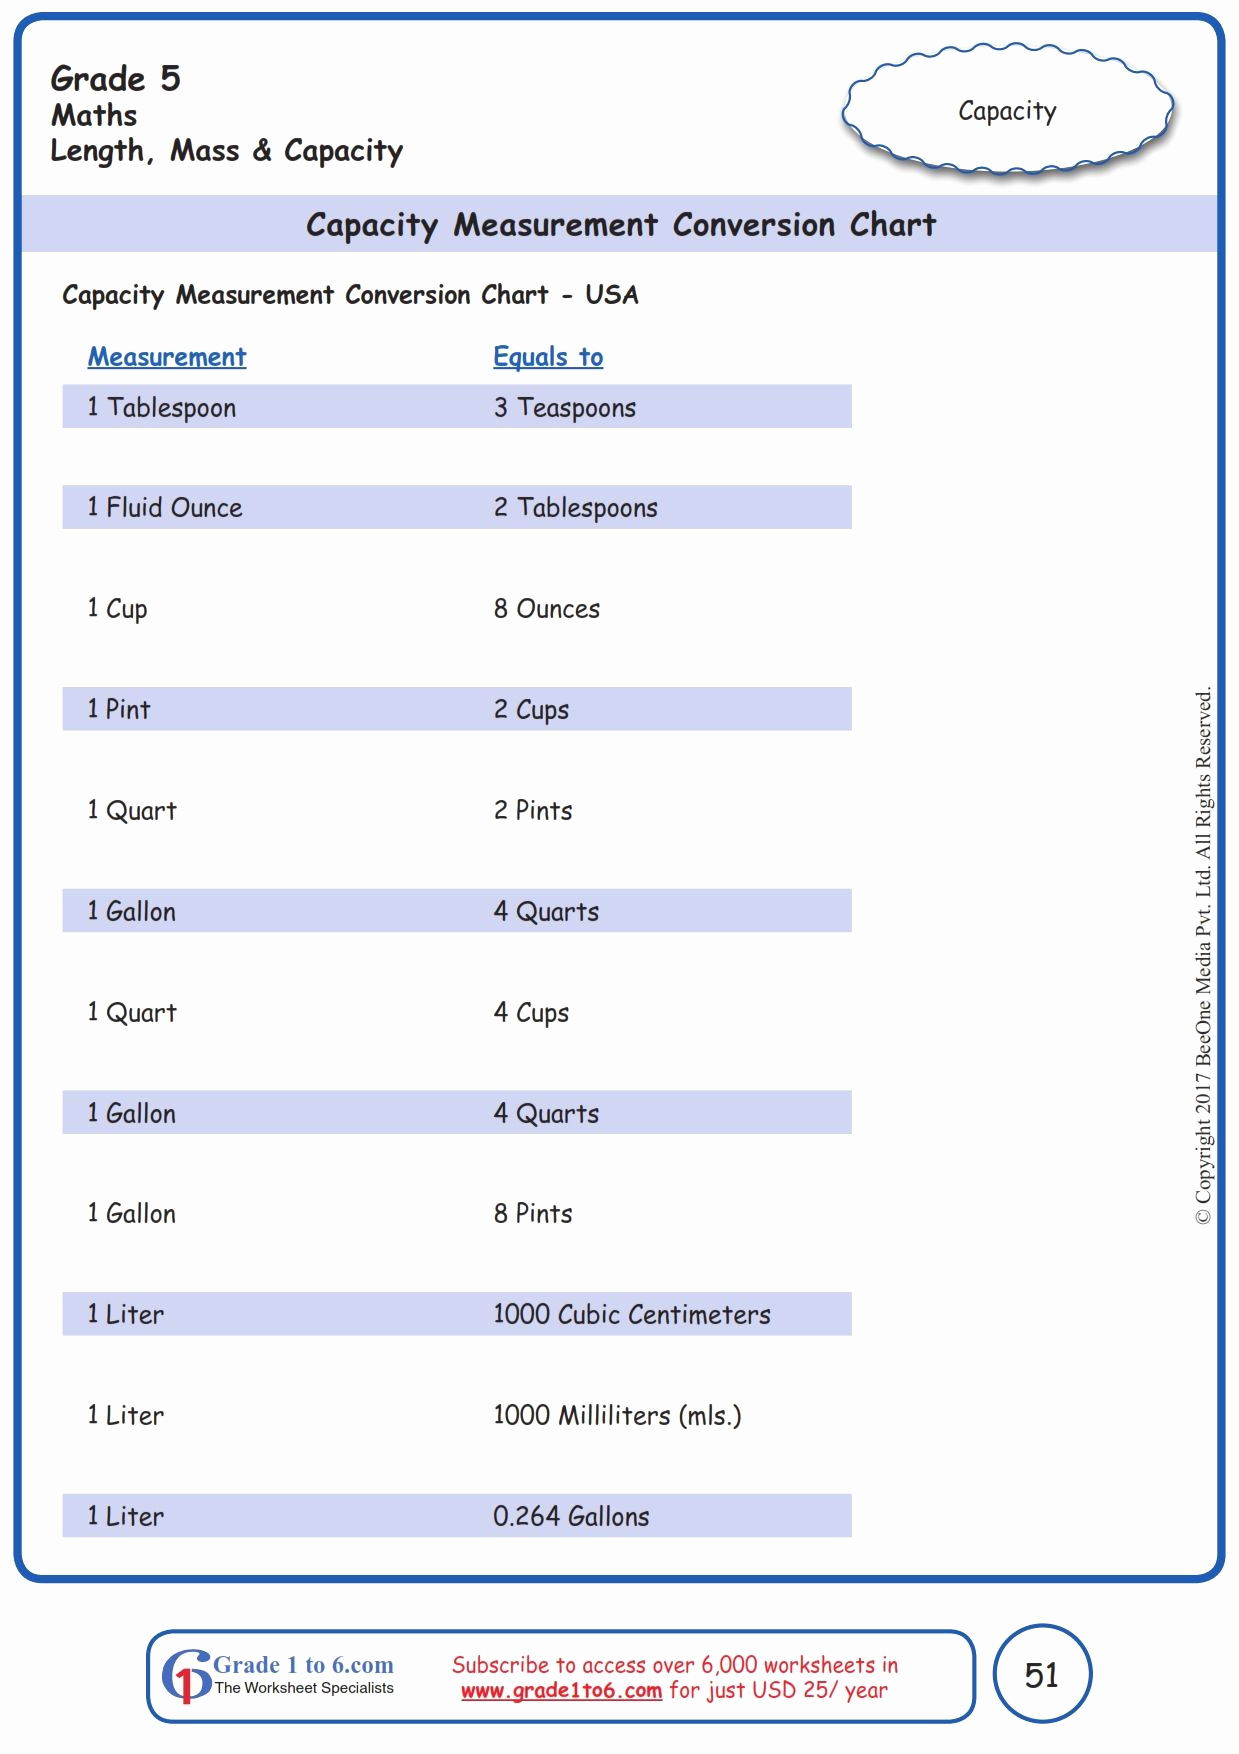 Metric Conversion Worksheets 5th Grade Unique Worksheet Grade 5 Math Capacity Measurement Conersion